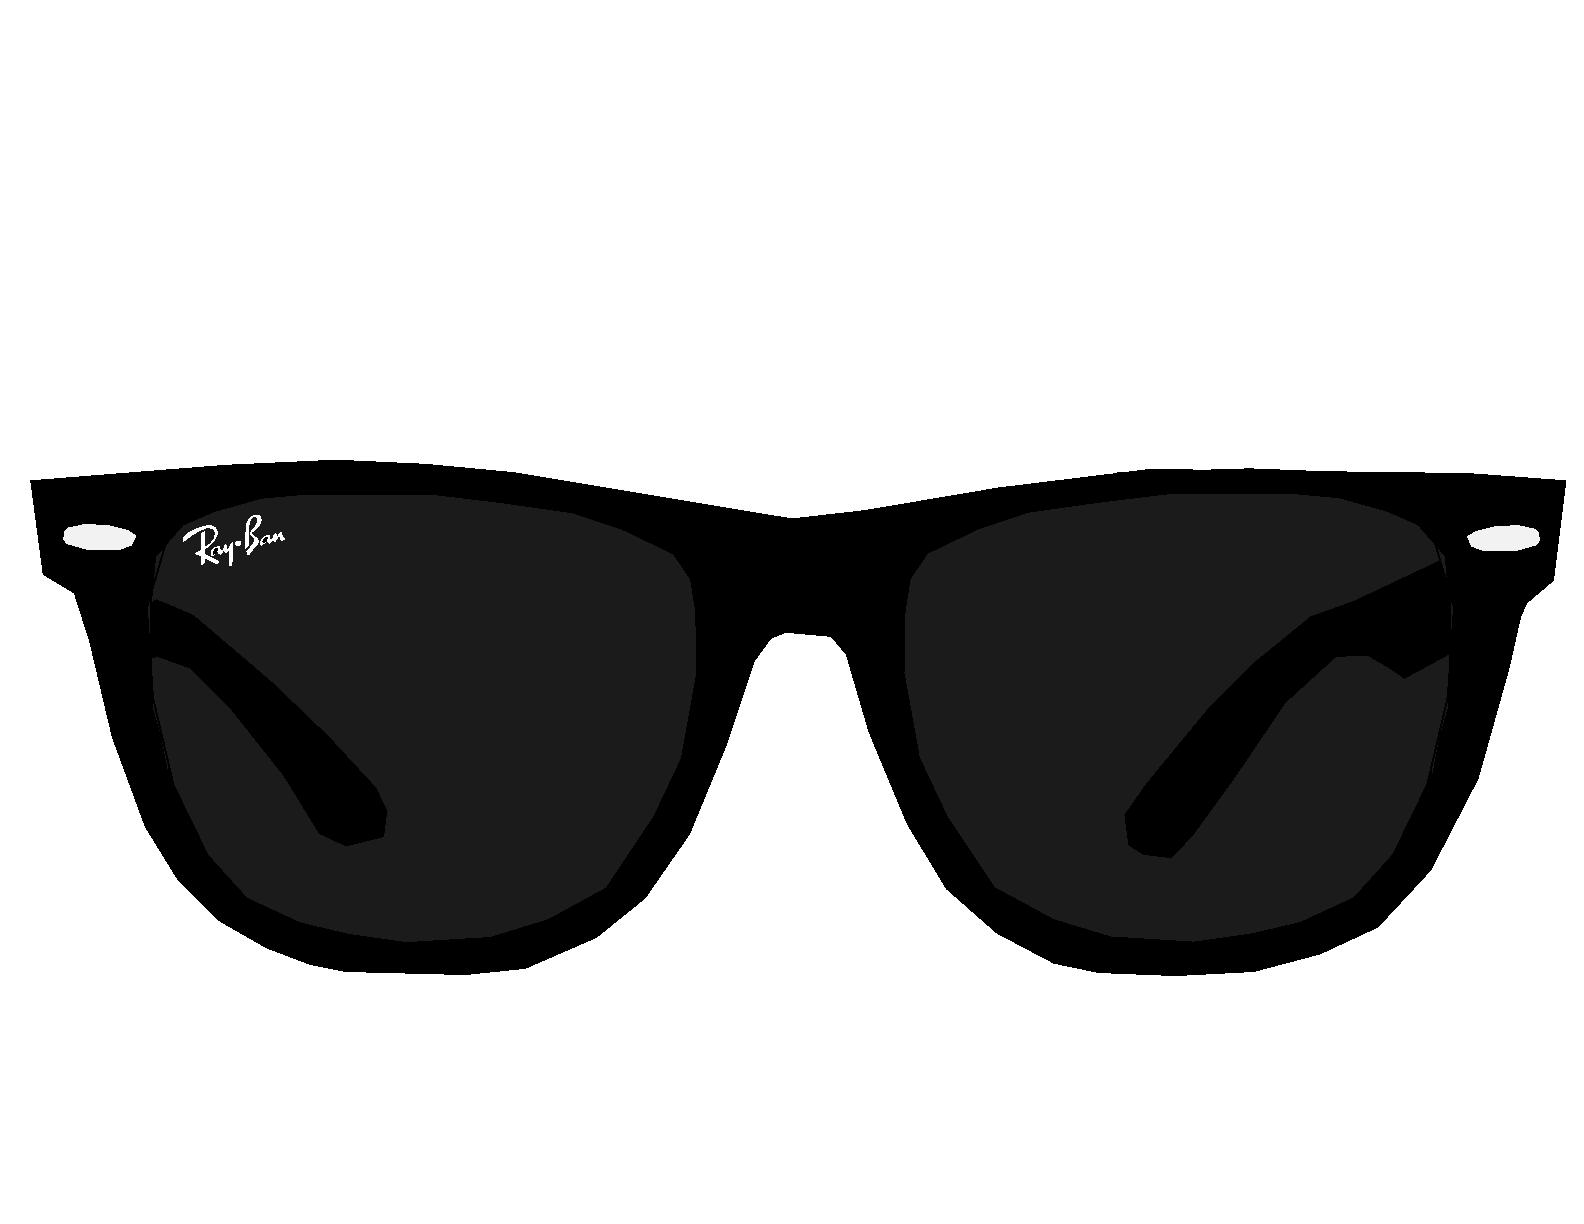 Sunglasses HD wallpapers, Desktop wallpaper - most viewed